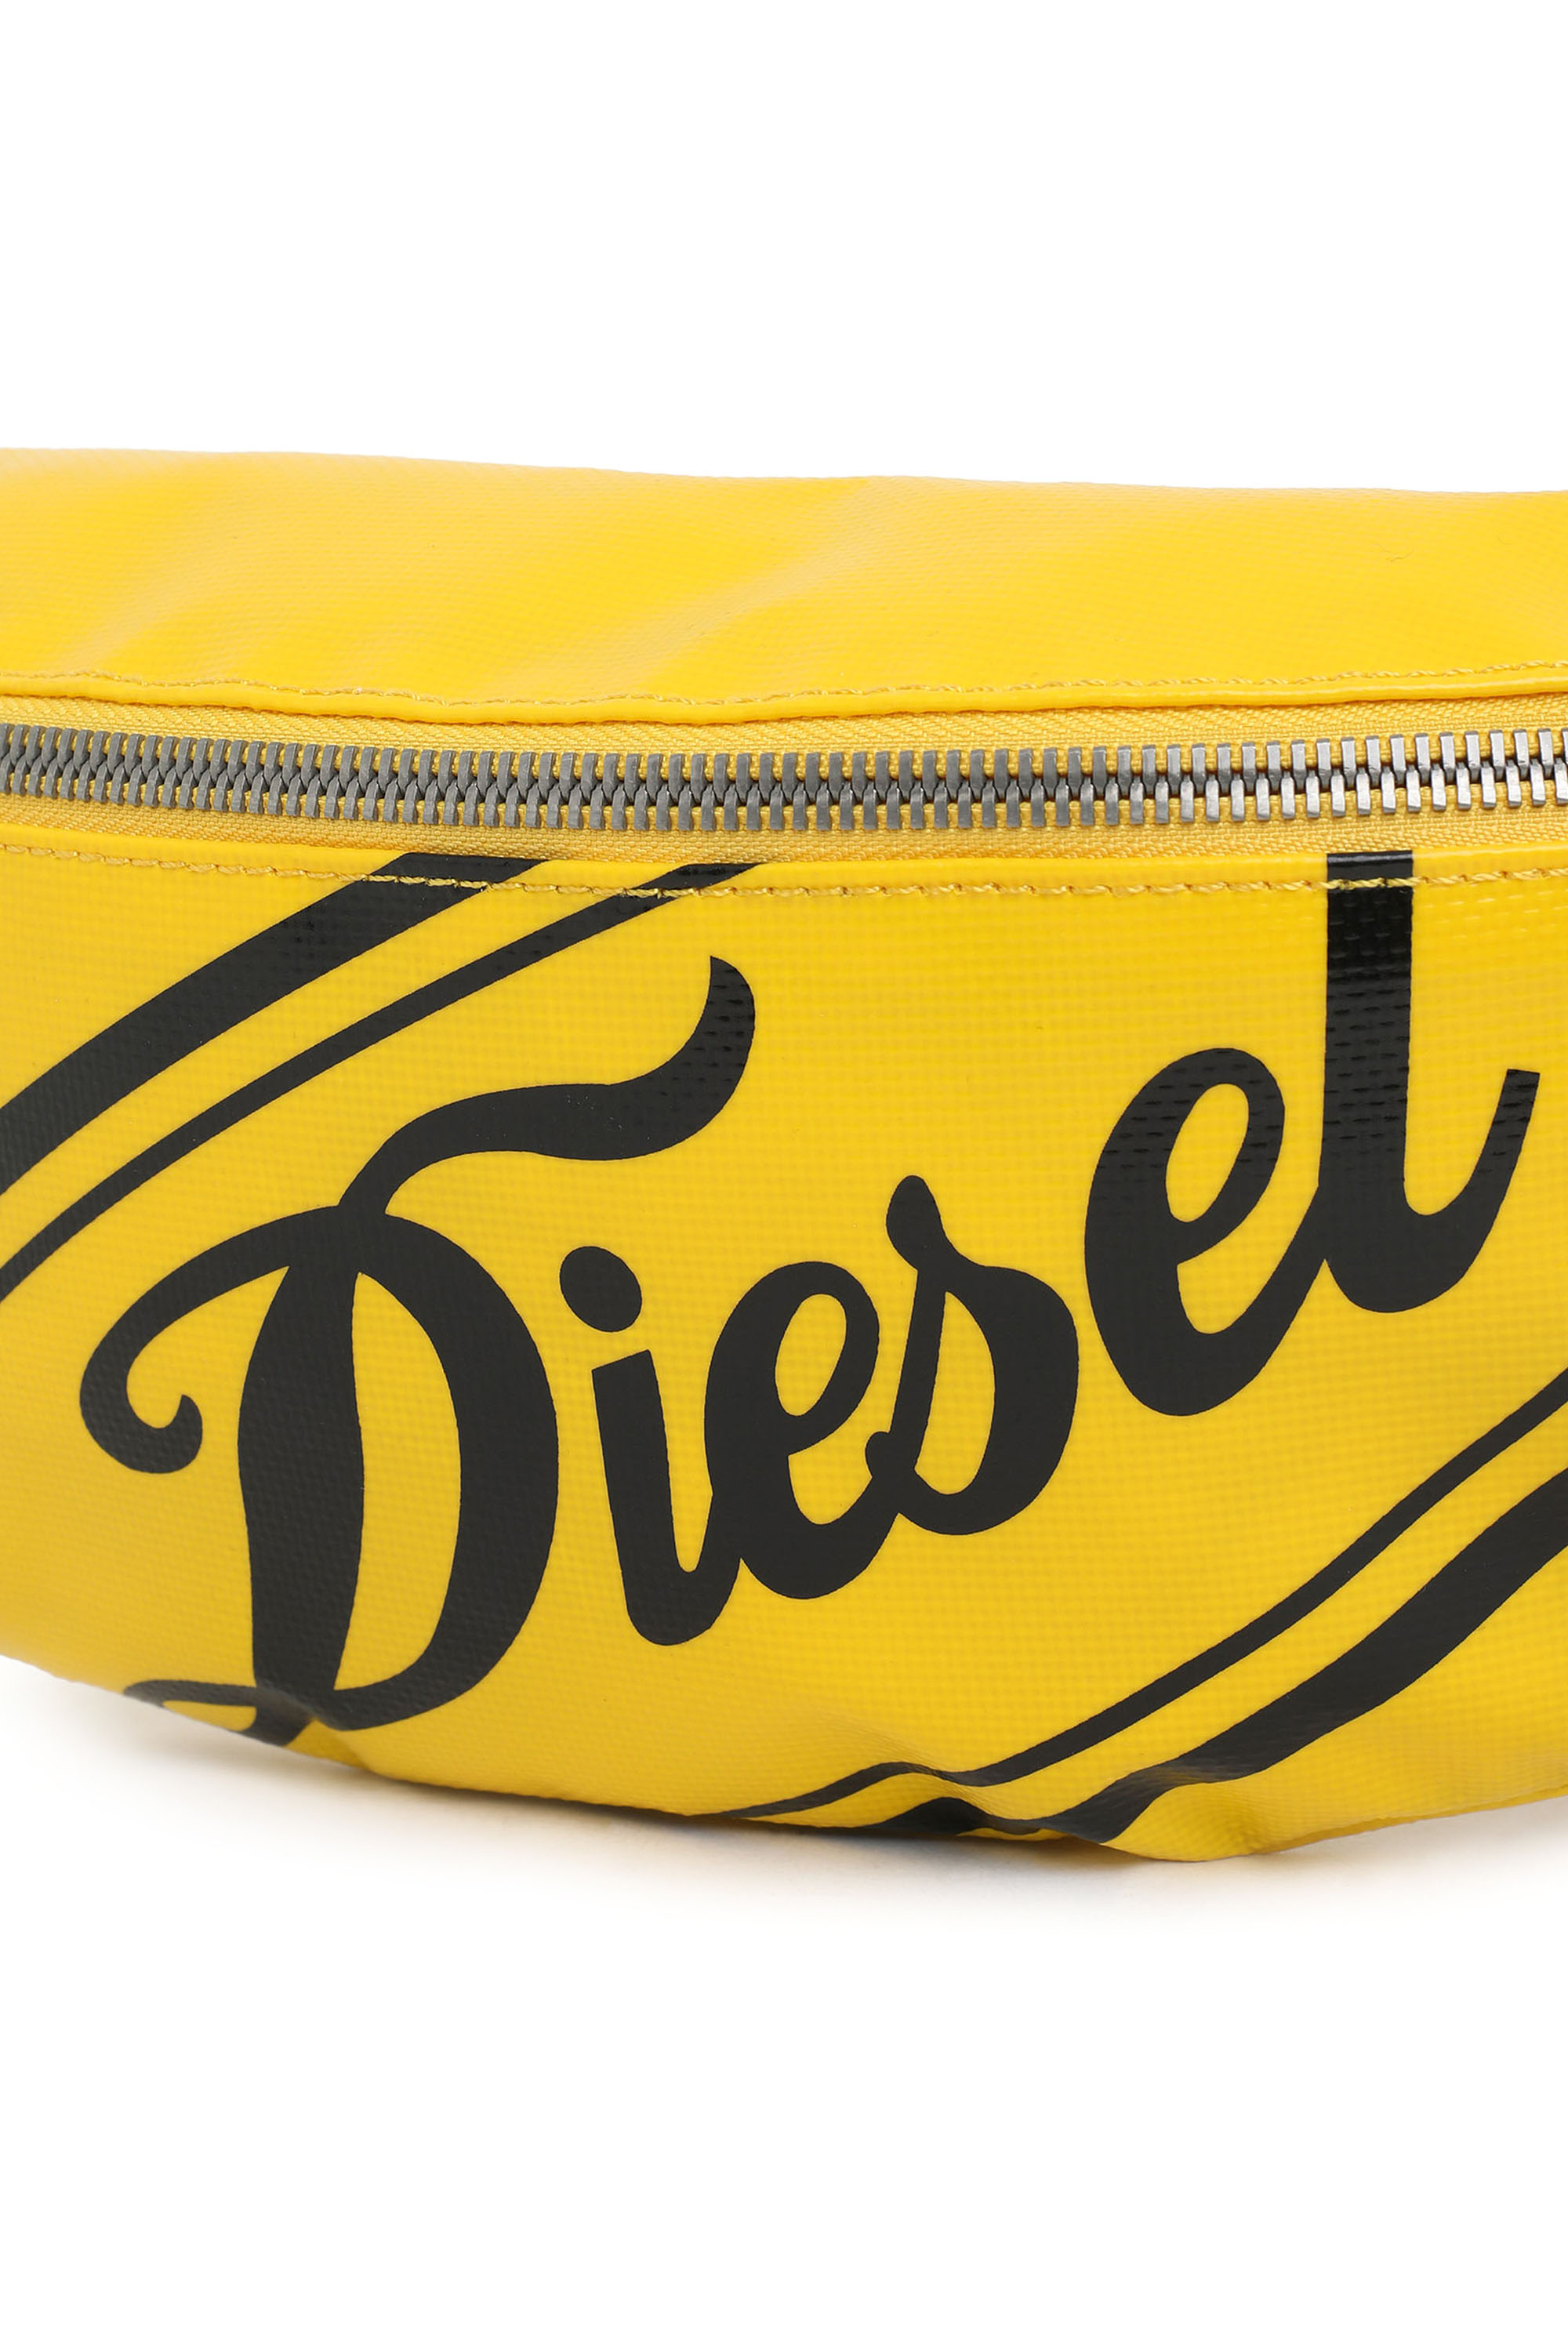 Diesel - ORFEI, Yellow - Image 5